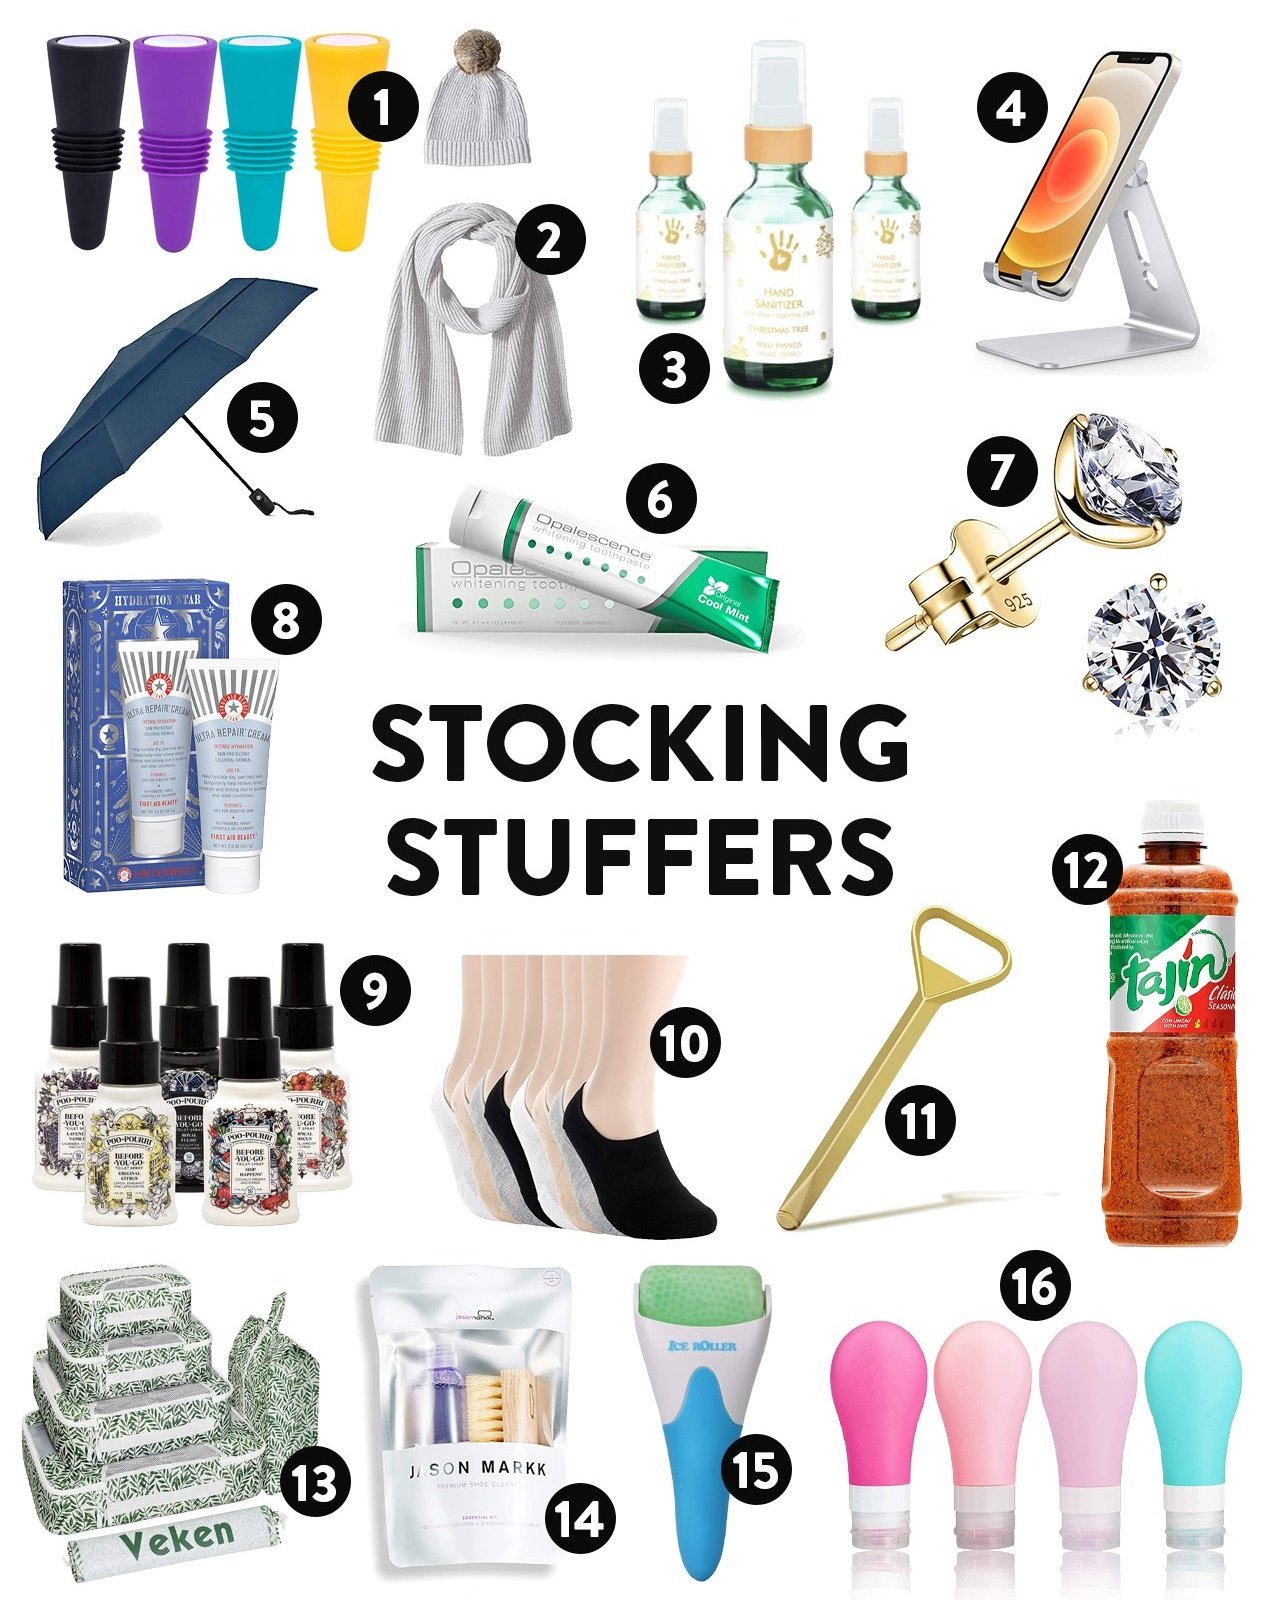 15 Stocking Stuffer Ideas She'll Love – My Sister's Closet